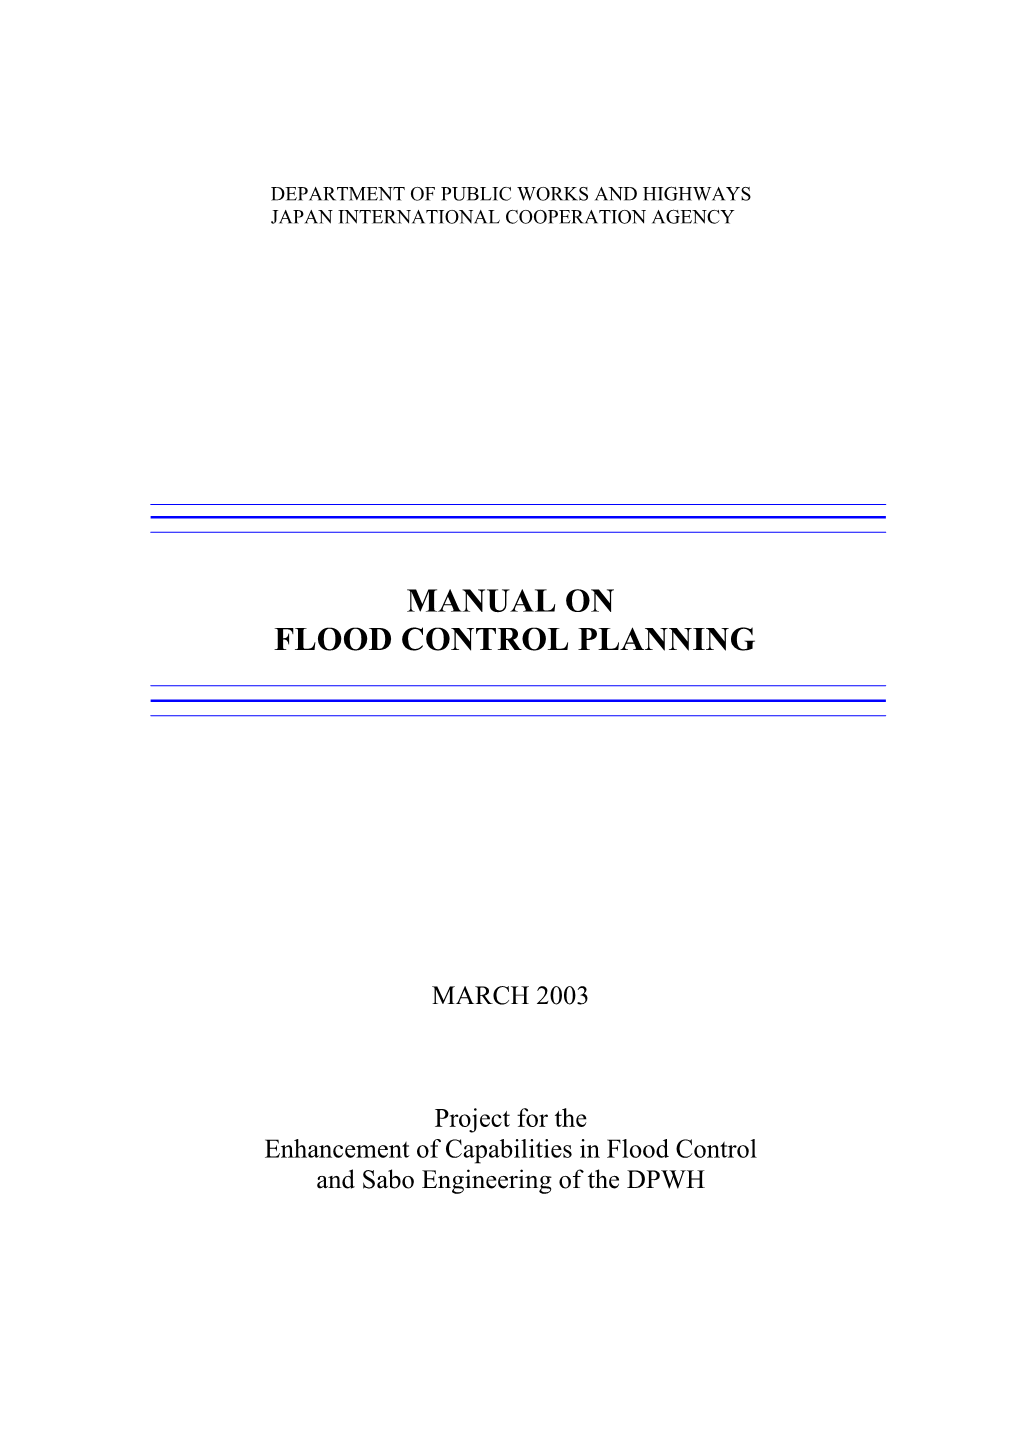 Manual on Flood Control Planning